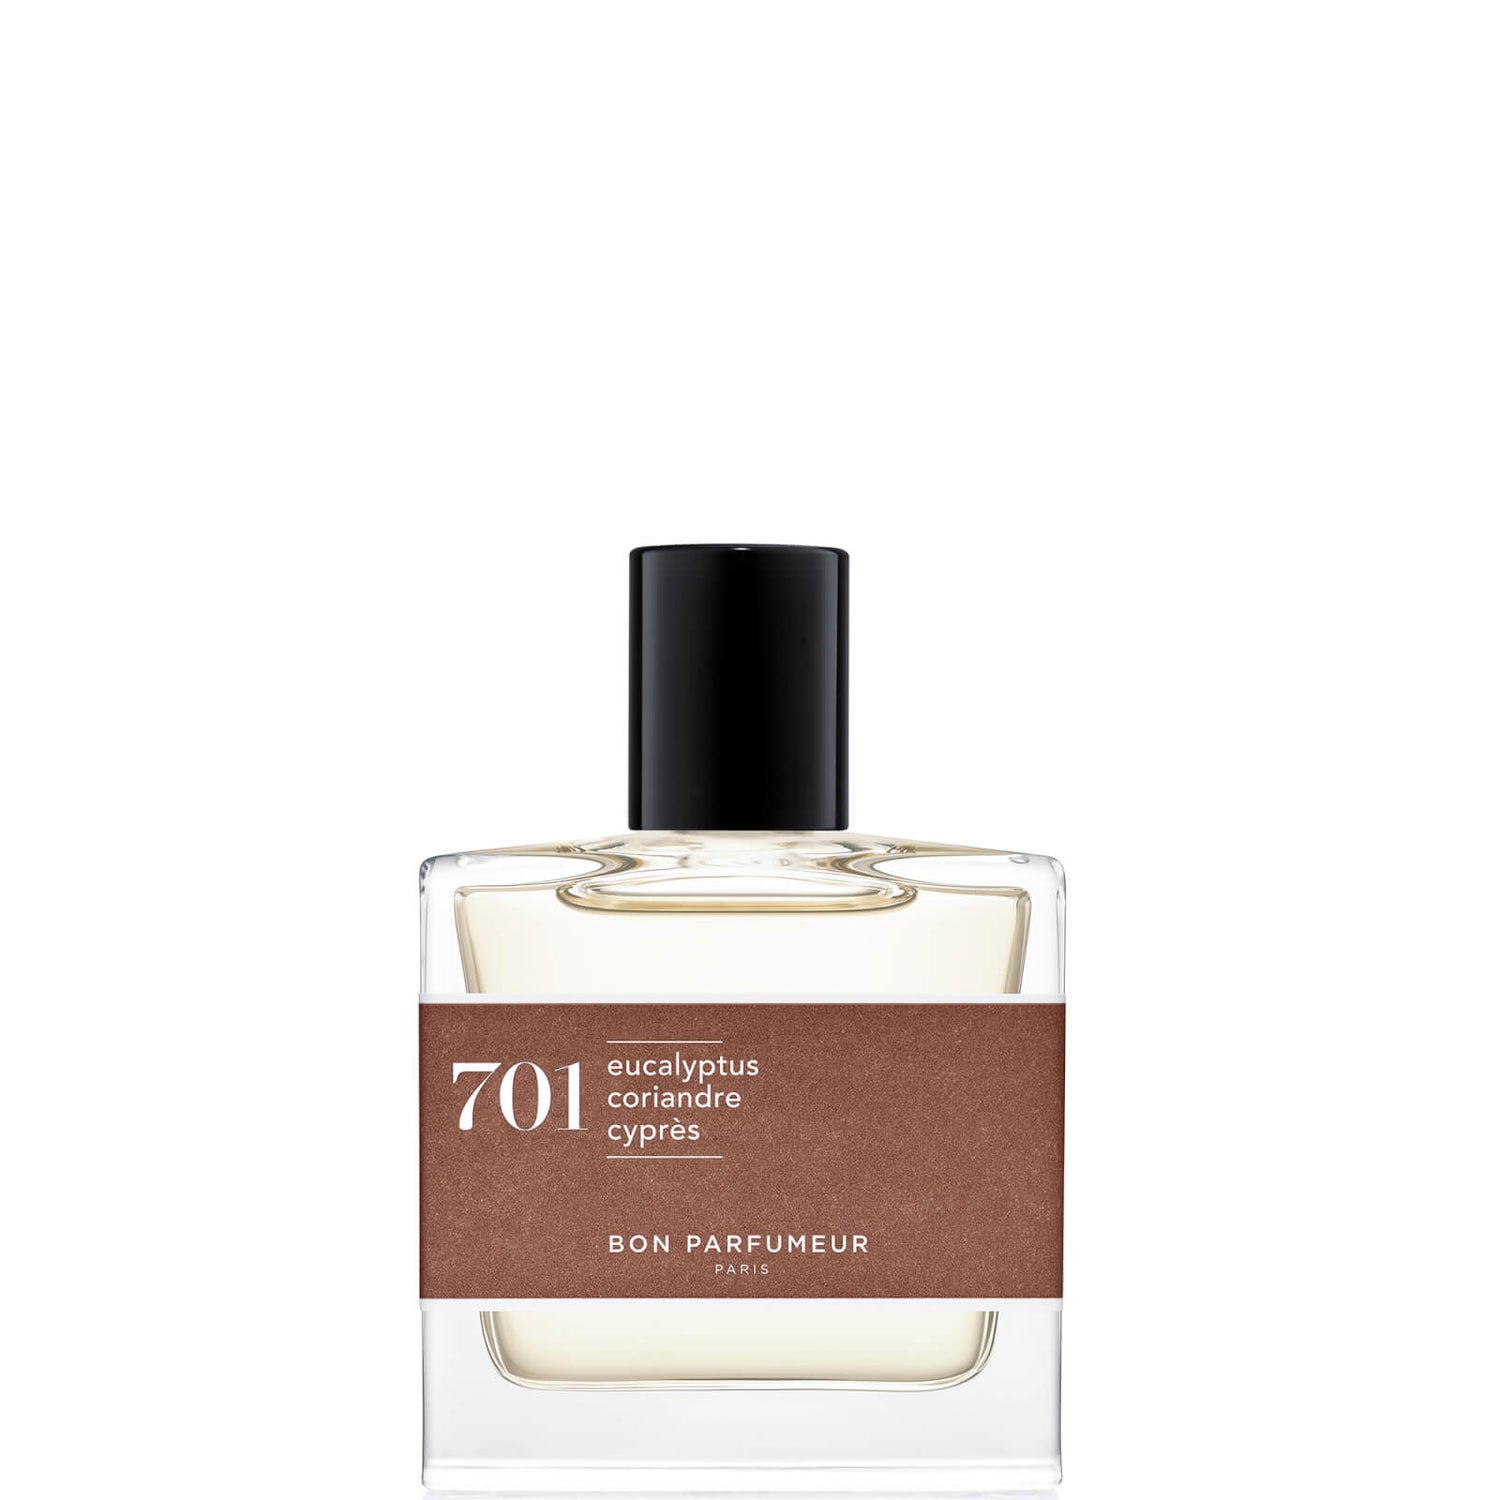 Bon Parfumeur 701 Eucalipto Coriandolo Cypresso Eau de Parfum - 30ml